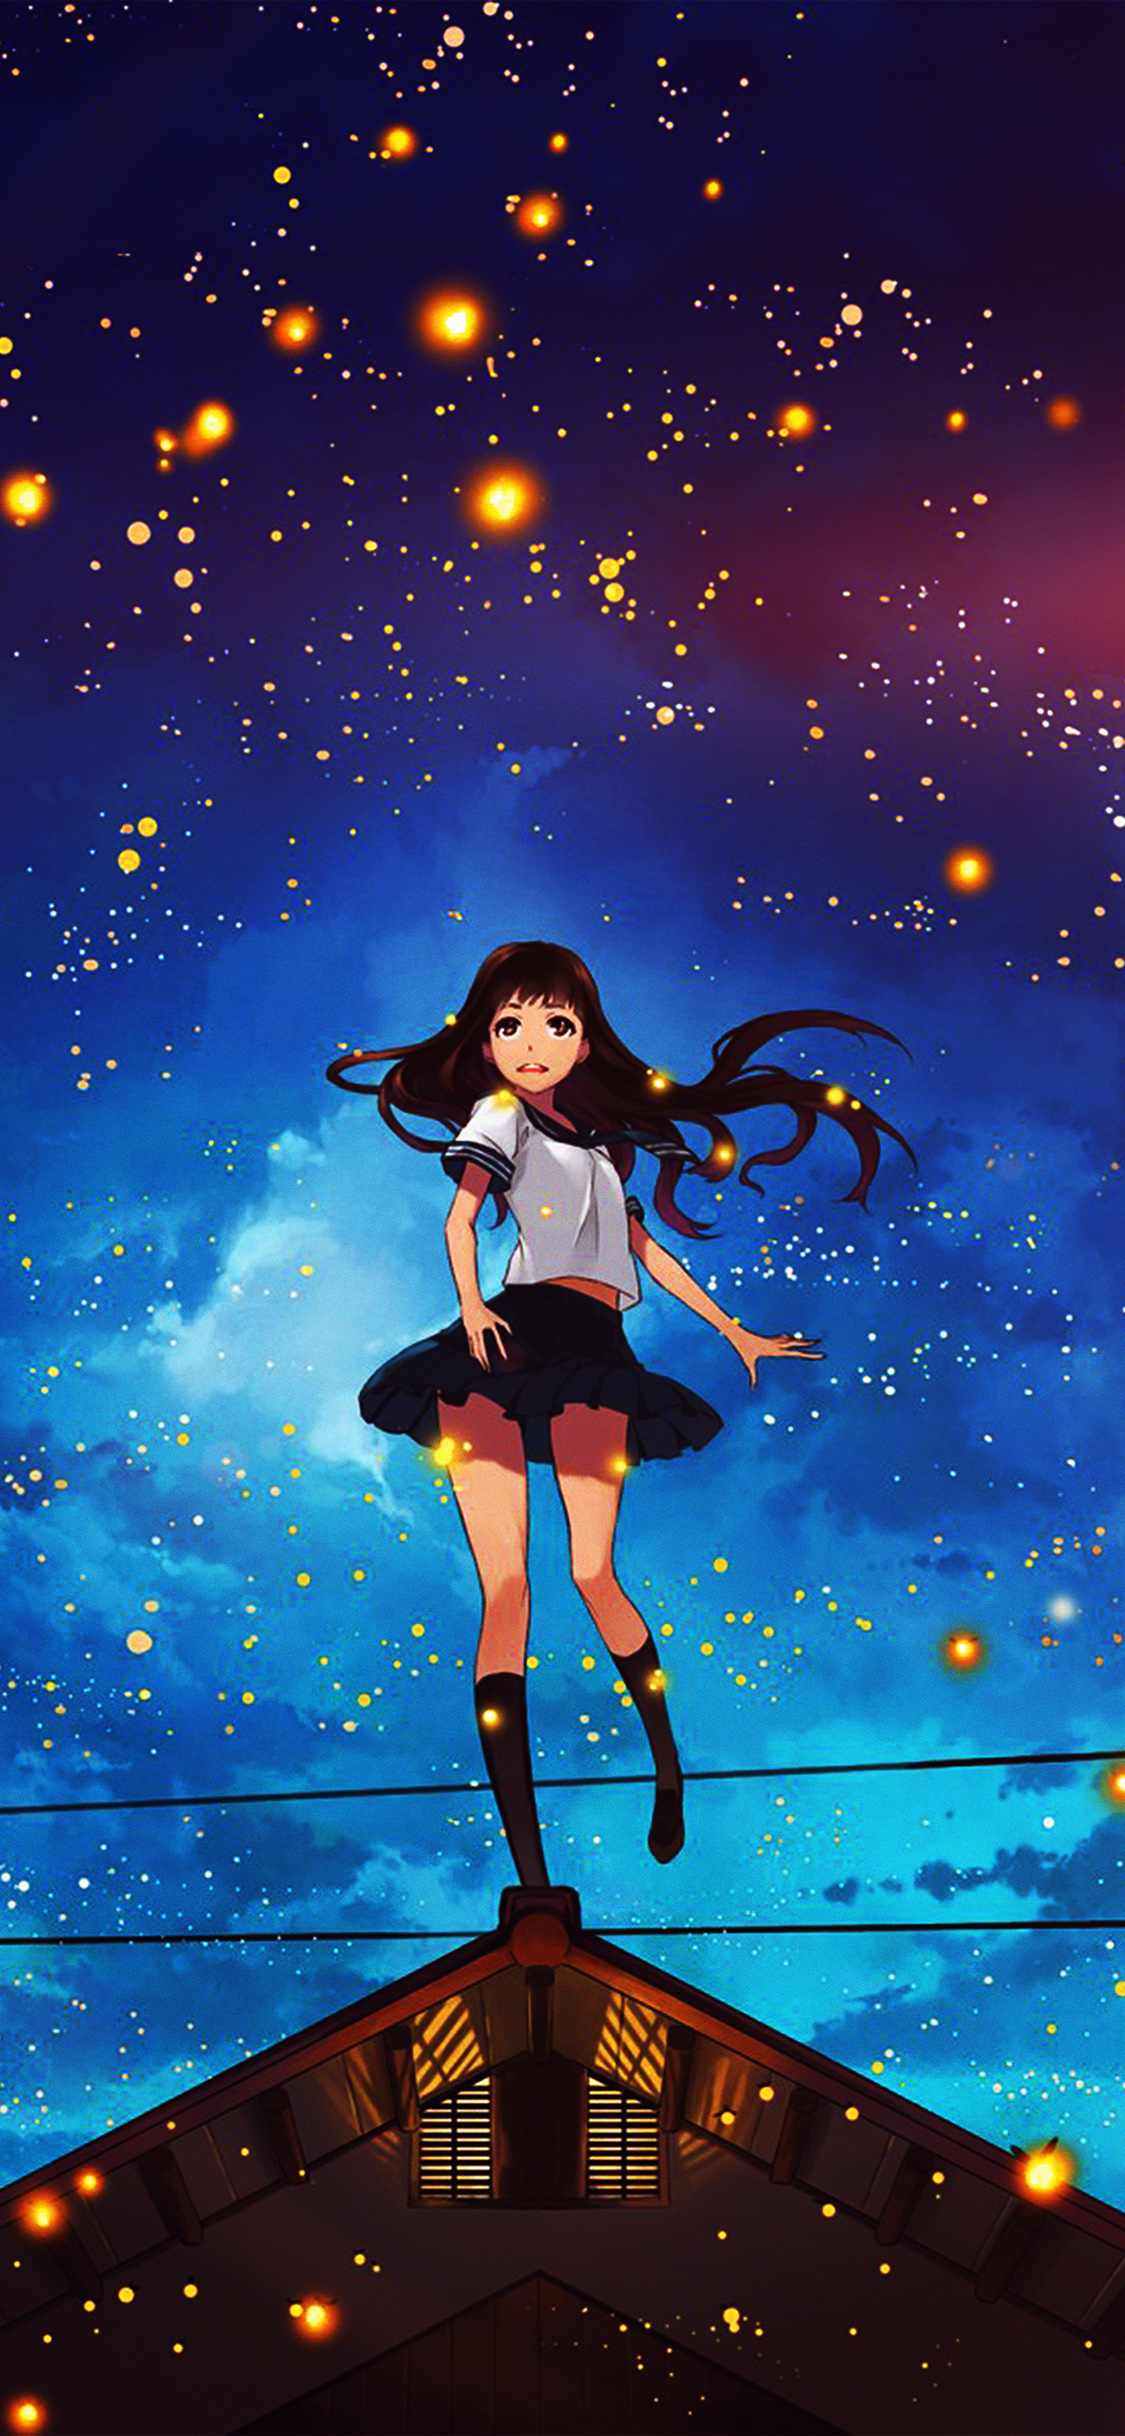 Anime Art Wallpaper Android - HD Wallpaper 